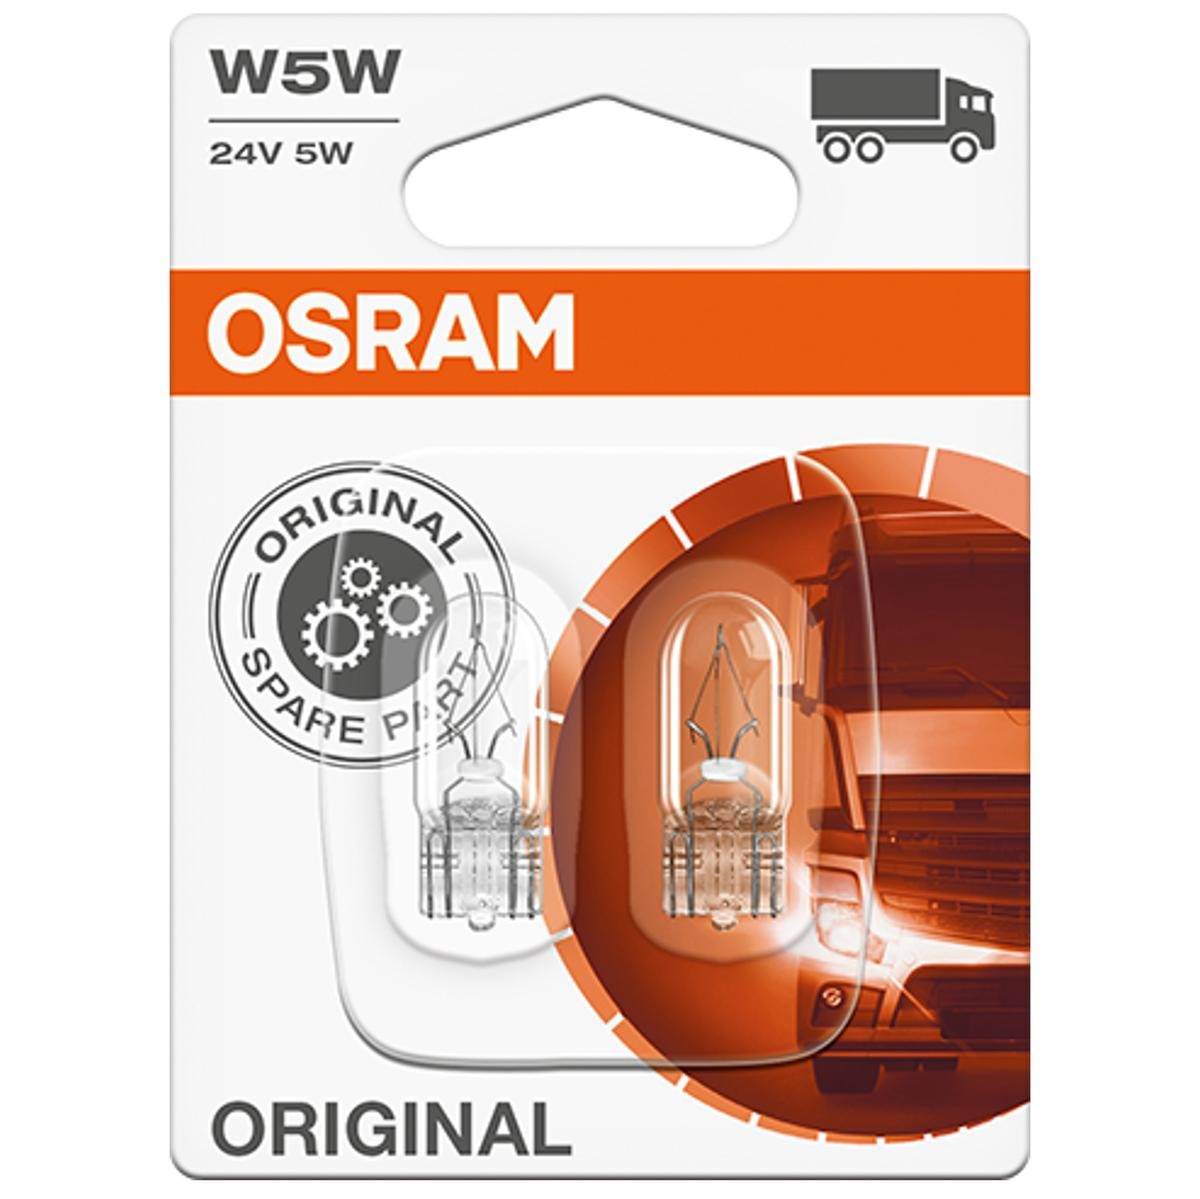 2845-02B OSRAM ORIGINAL LINE W5W Bulb, indicator 24V 5W, W5W